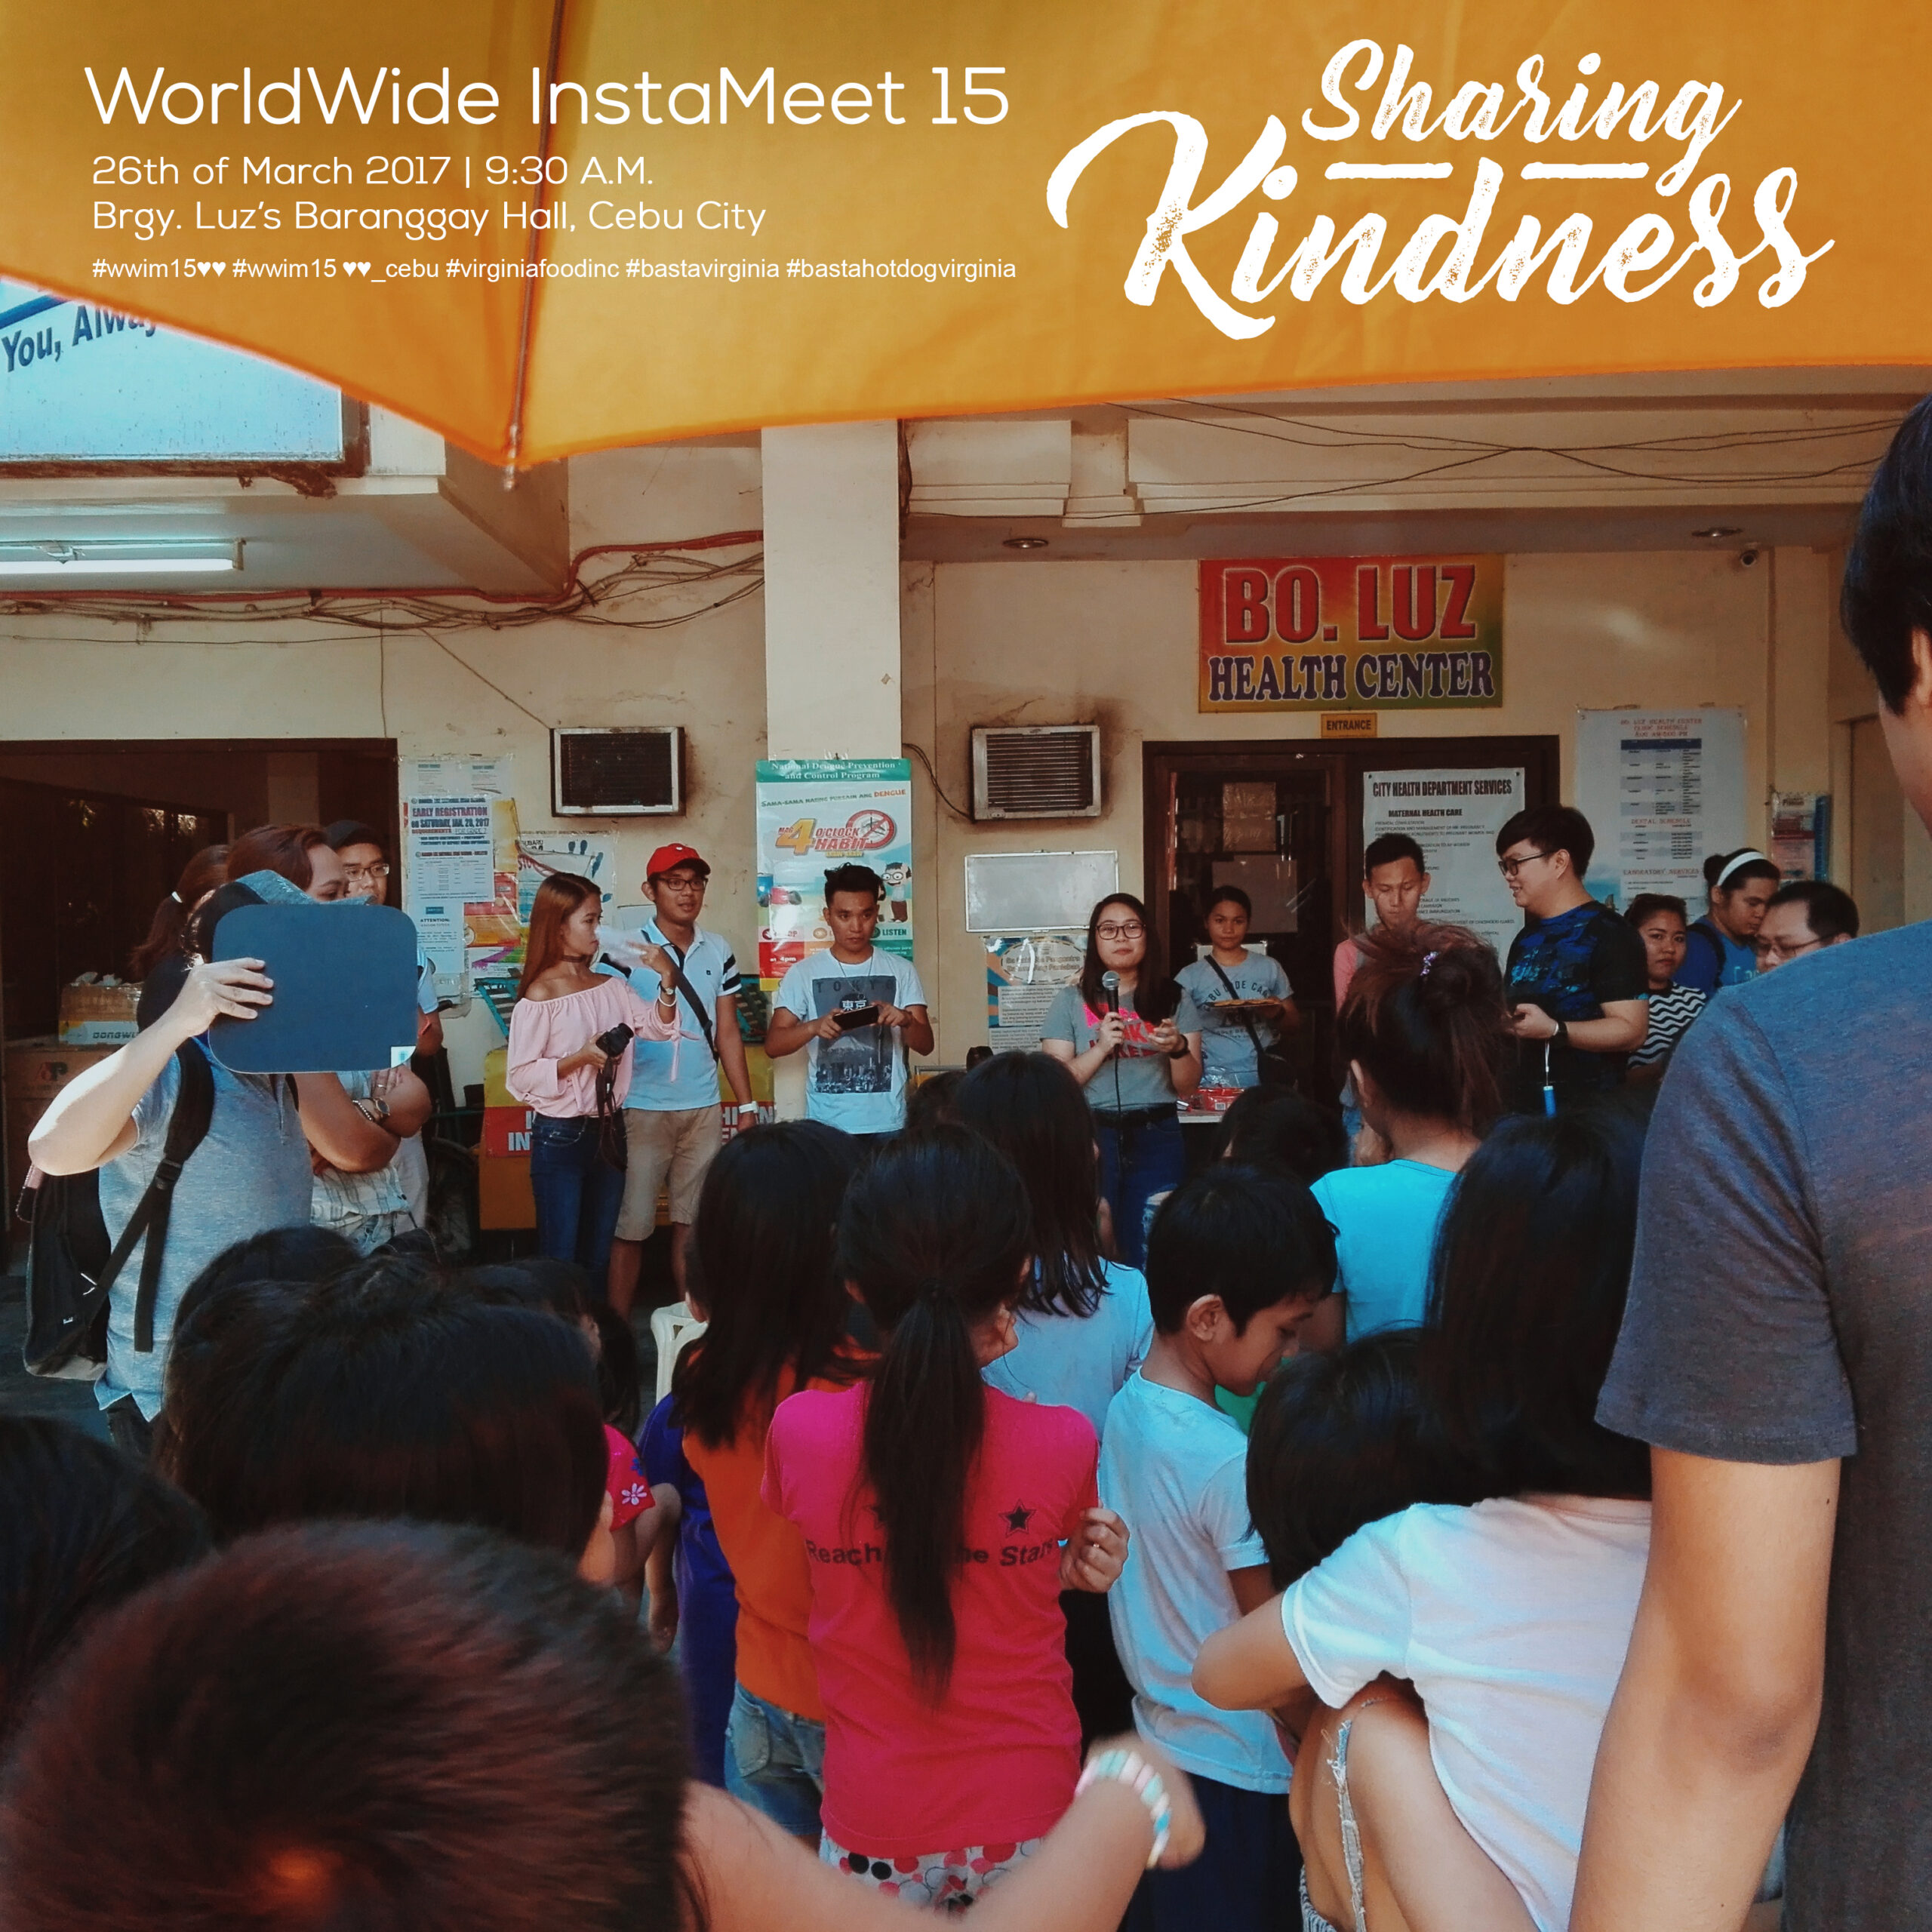 WorldWide InstaMeet 15: “Sharing Kindness”